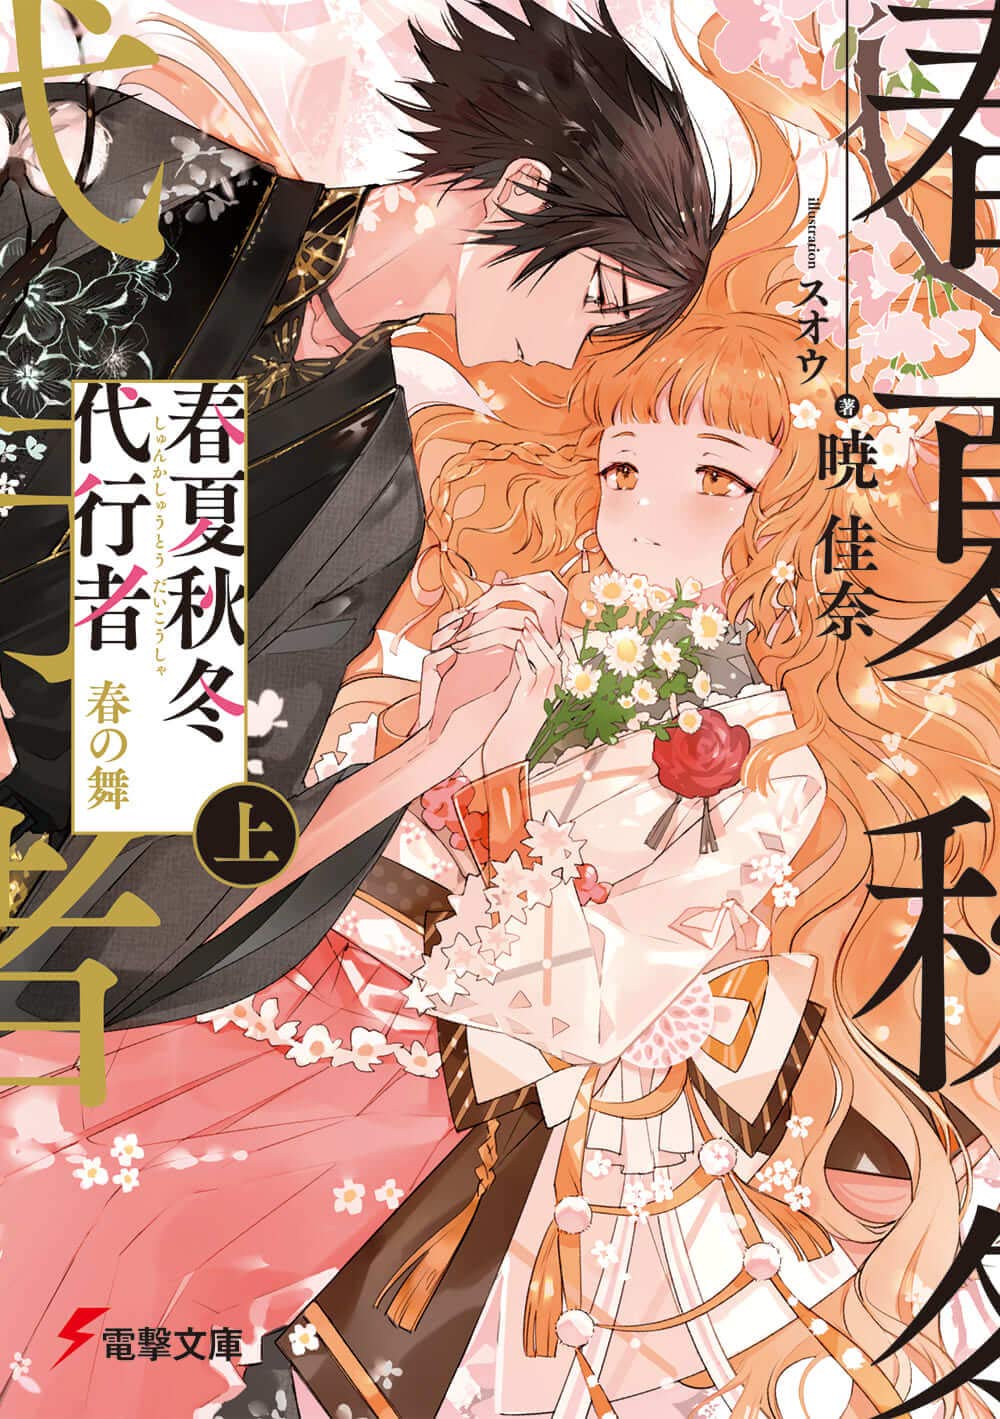 Kono Light Novel ga Sugoi! Reveals 2023 Series Ranking - News